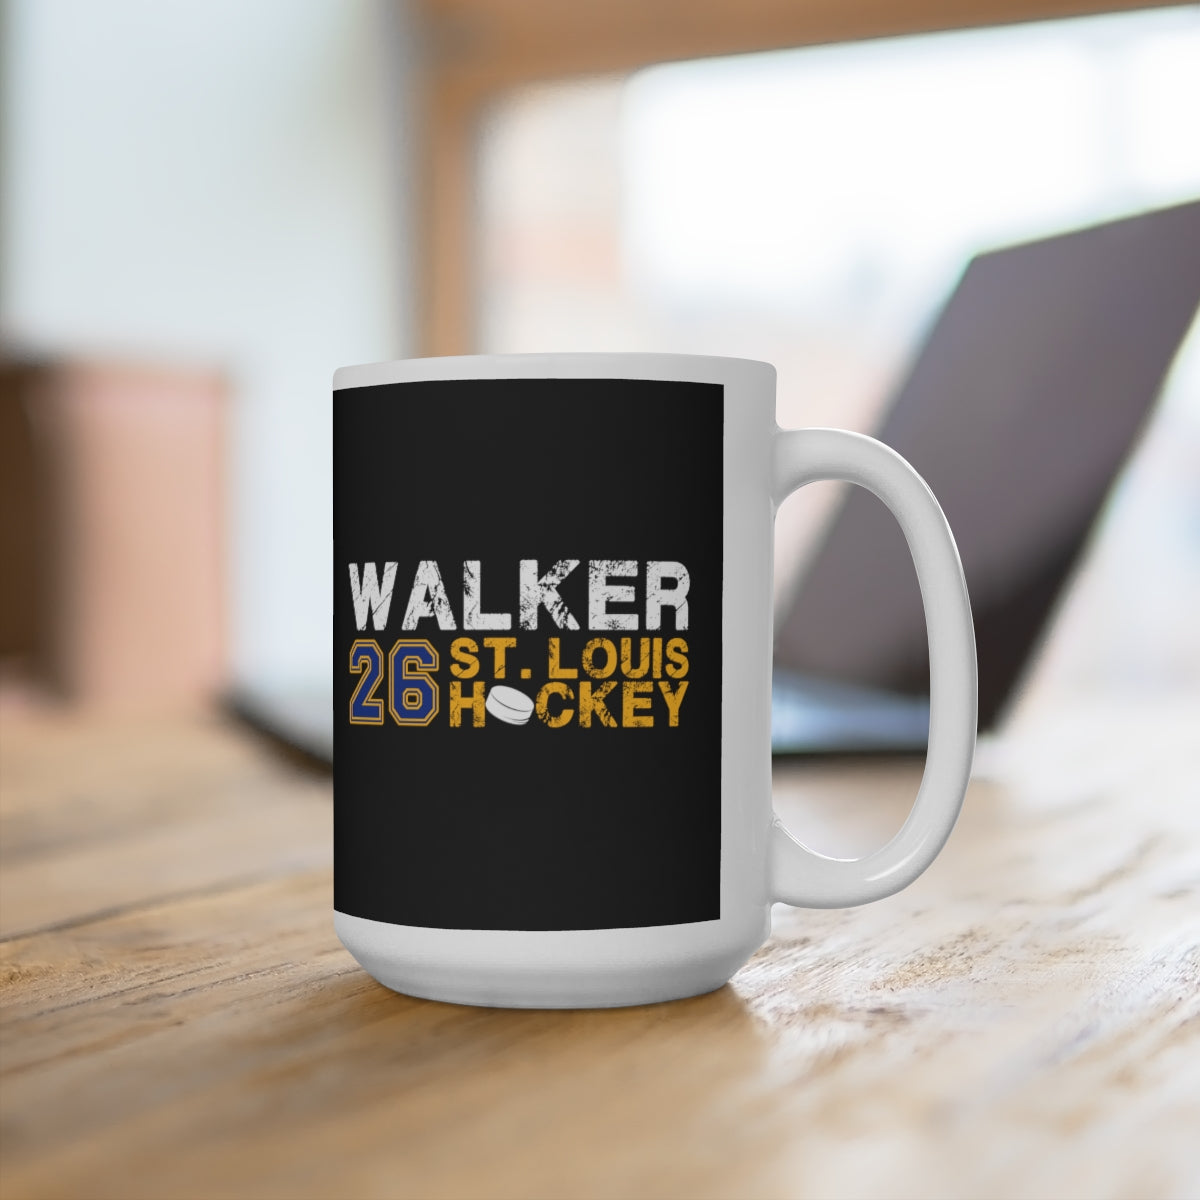 Walker 26 St. Louis Hockey Ceramic Coffee Mug In Black, 15oz